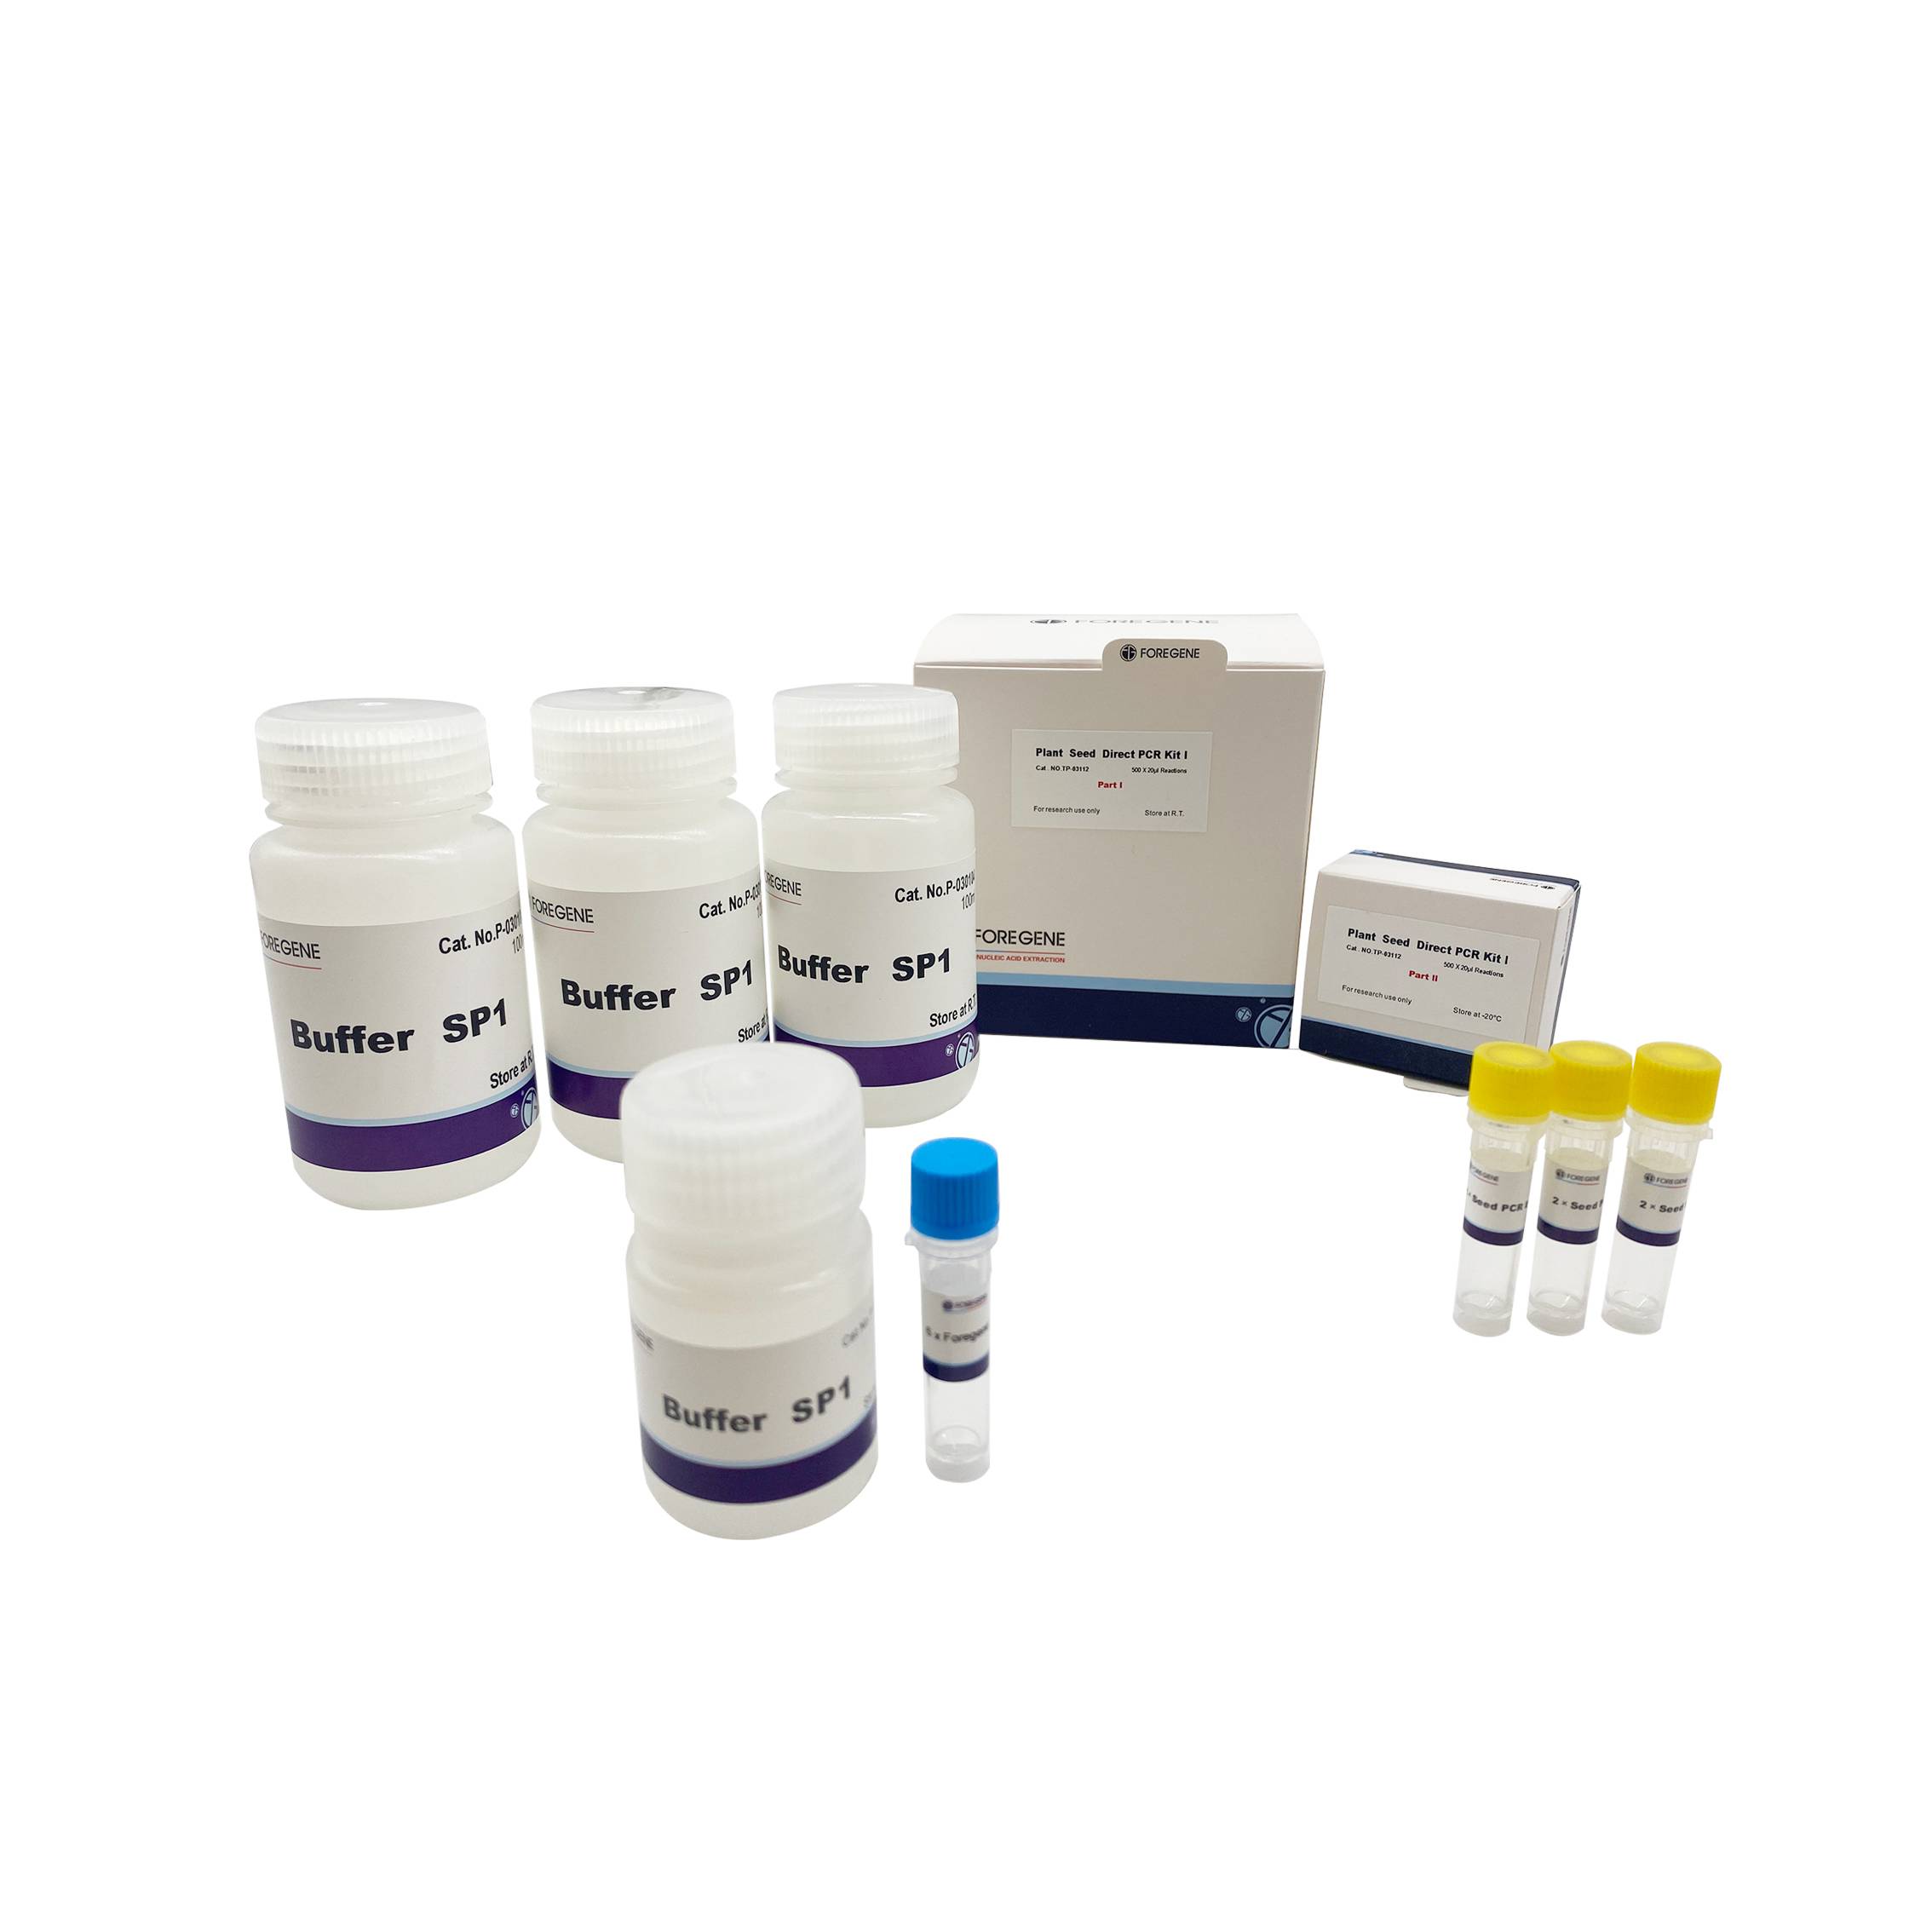 Kit Plant Seed Direct PCR I/II (fără instrumente de eșantionare) Protocol Plant Seed Direct PCR Kits